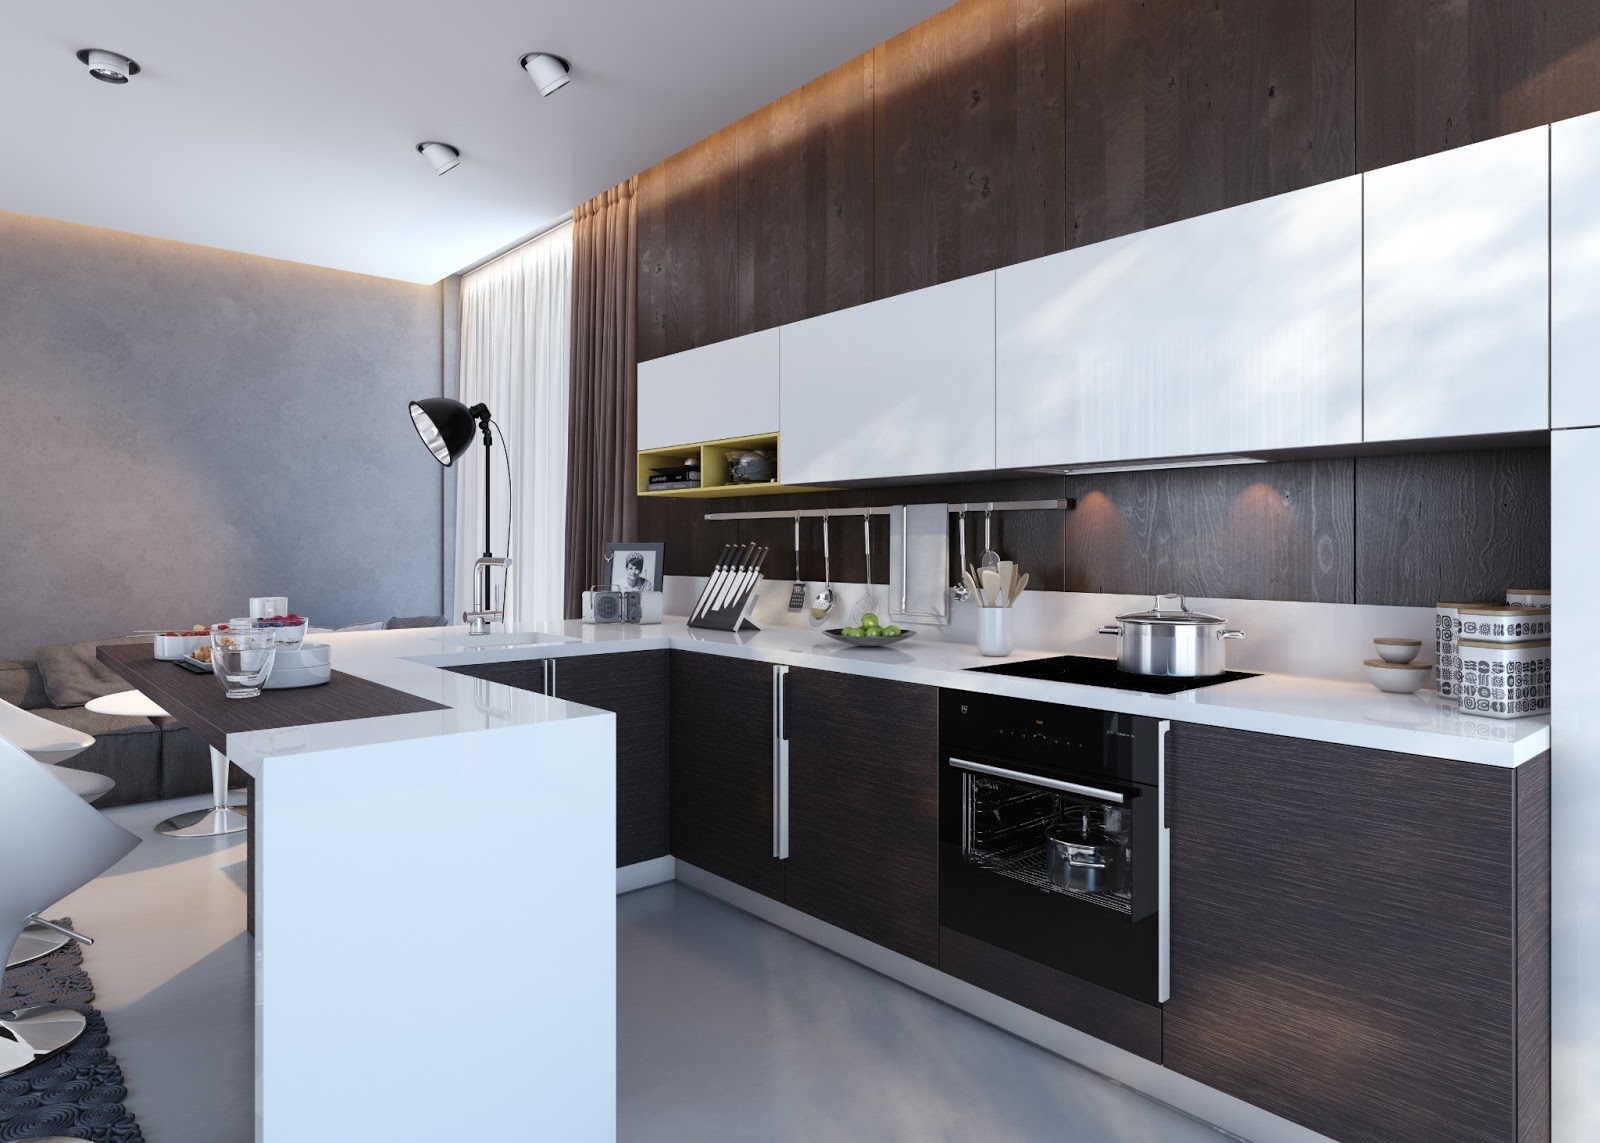 Ideas for minimalist kitchen design "width =" 1600 "height =" 1143 "srcset =" https://mileray.com/wp-content/uploads/2020/05/1588512725_285_2-Minimalist-Kitchen-Design-That-Will-Stunning-You-By-Artem.jpeg 1600w, https: / /mileray.com/wp-content/uploads/2016/06/3-Wenge-kitchen-units-300x214.jpeg 300w, https://mileray.com/wp-content/uploads/2016/06/3-Wenge- Kitchen units-768x549.jpeg 768w, https://mileray.com/wp-content/uploads/2016/06/3-Wenge-kitchen-units-1024x732.jpeg 1024w, https://mileray.com/wp- content / uploads / 2016/06 / 3-Wenge-Kitchen-Units-100x70.jpeg 100w, https://mileray.com/wp-content/uploads/2016/06/3-Wenge-kitchen-units-696x497.jpeg 696w, https: //mileray.com/wp-content/uploads/2016/06/3-Wenge-kitchen-units-1068x763.jpeg 1068w, https://mileray.com/wp-content/uploads/2016/06 / 3-Wenge -kitchen-units-588x420.jpeg 588w "sizes =" (maximum width: 1600px) 100vw, 1600px